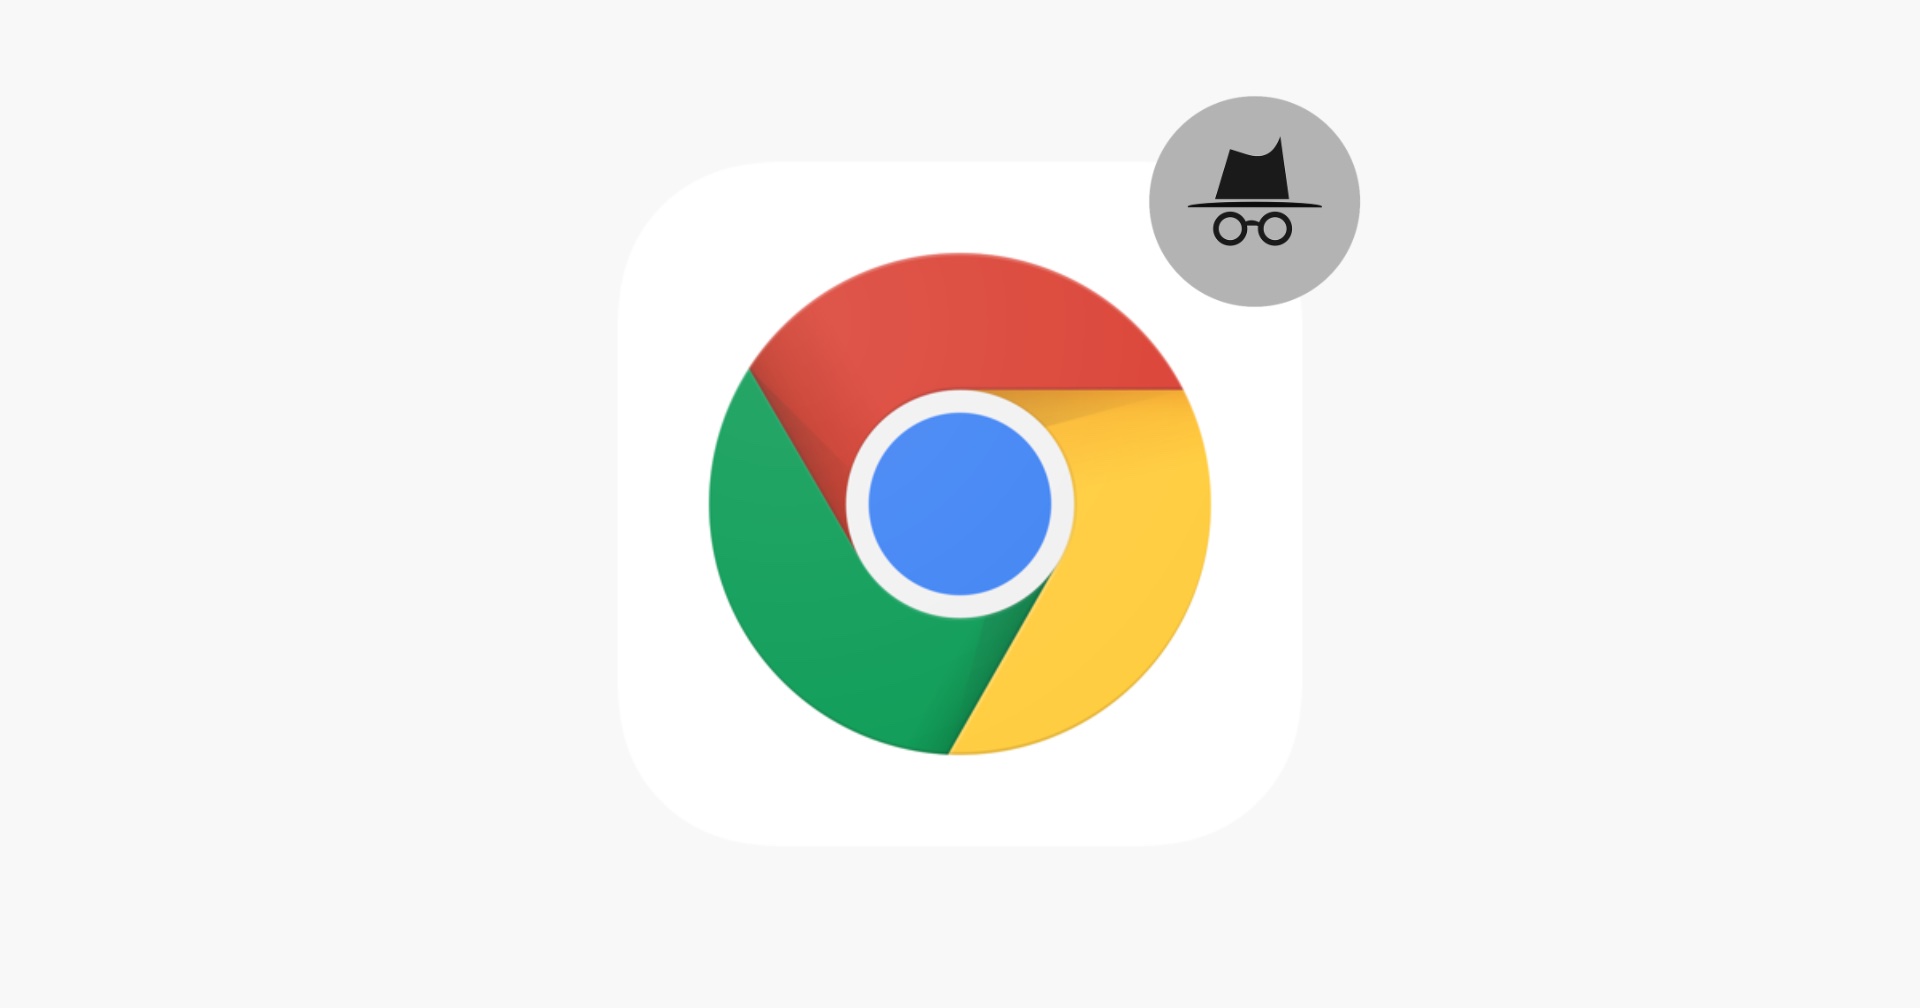 Google โดนฟ้องร้องกรณี Chrome ติดตามผู้ใช้งานแม้ในโหมดไม่ระบุตัวตน